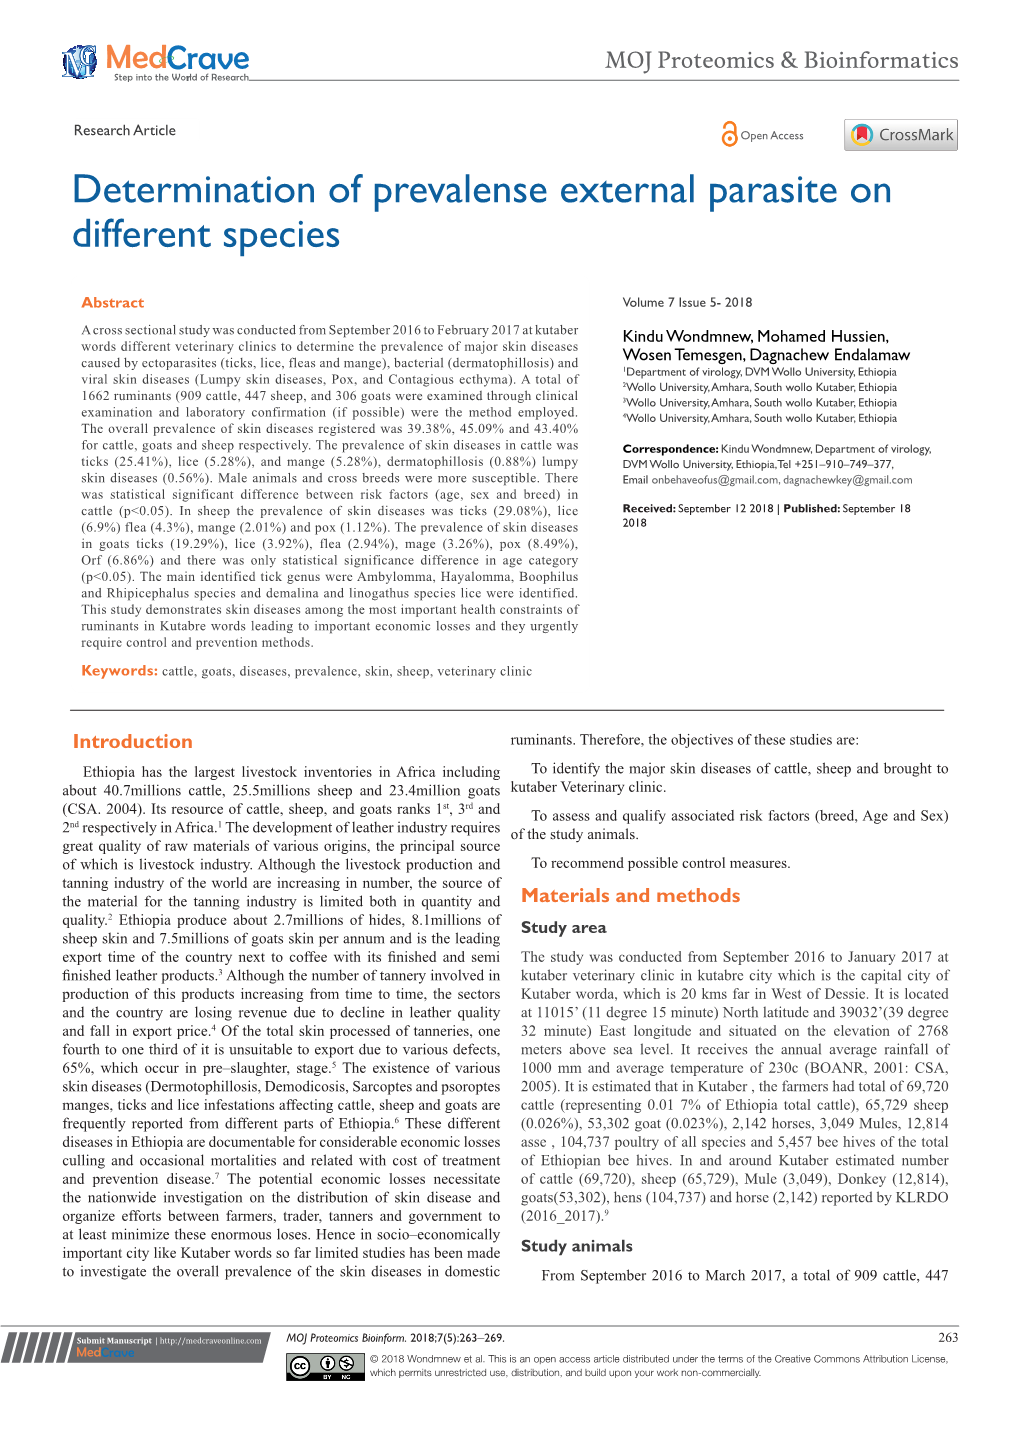 Determination of Prevalense External Parasite on Different Species